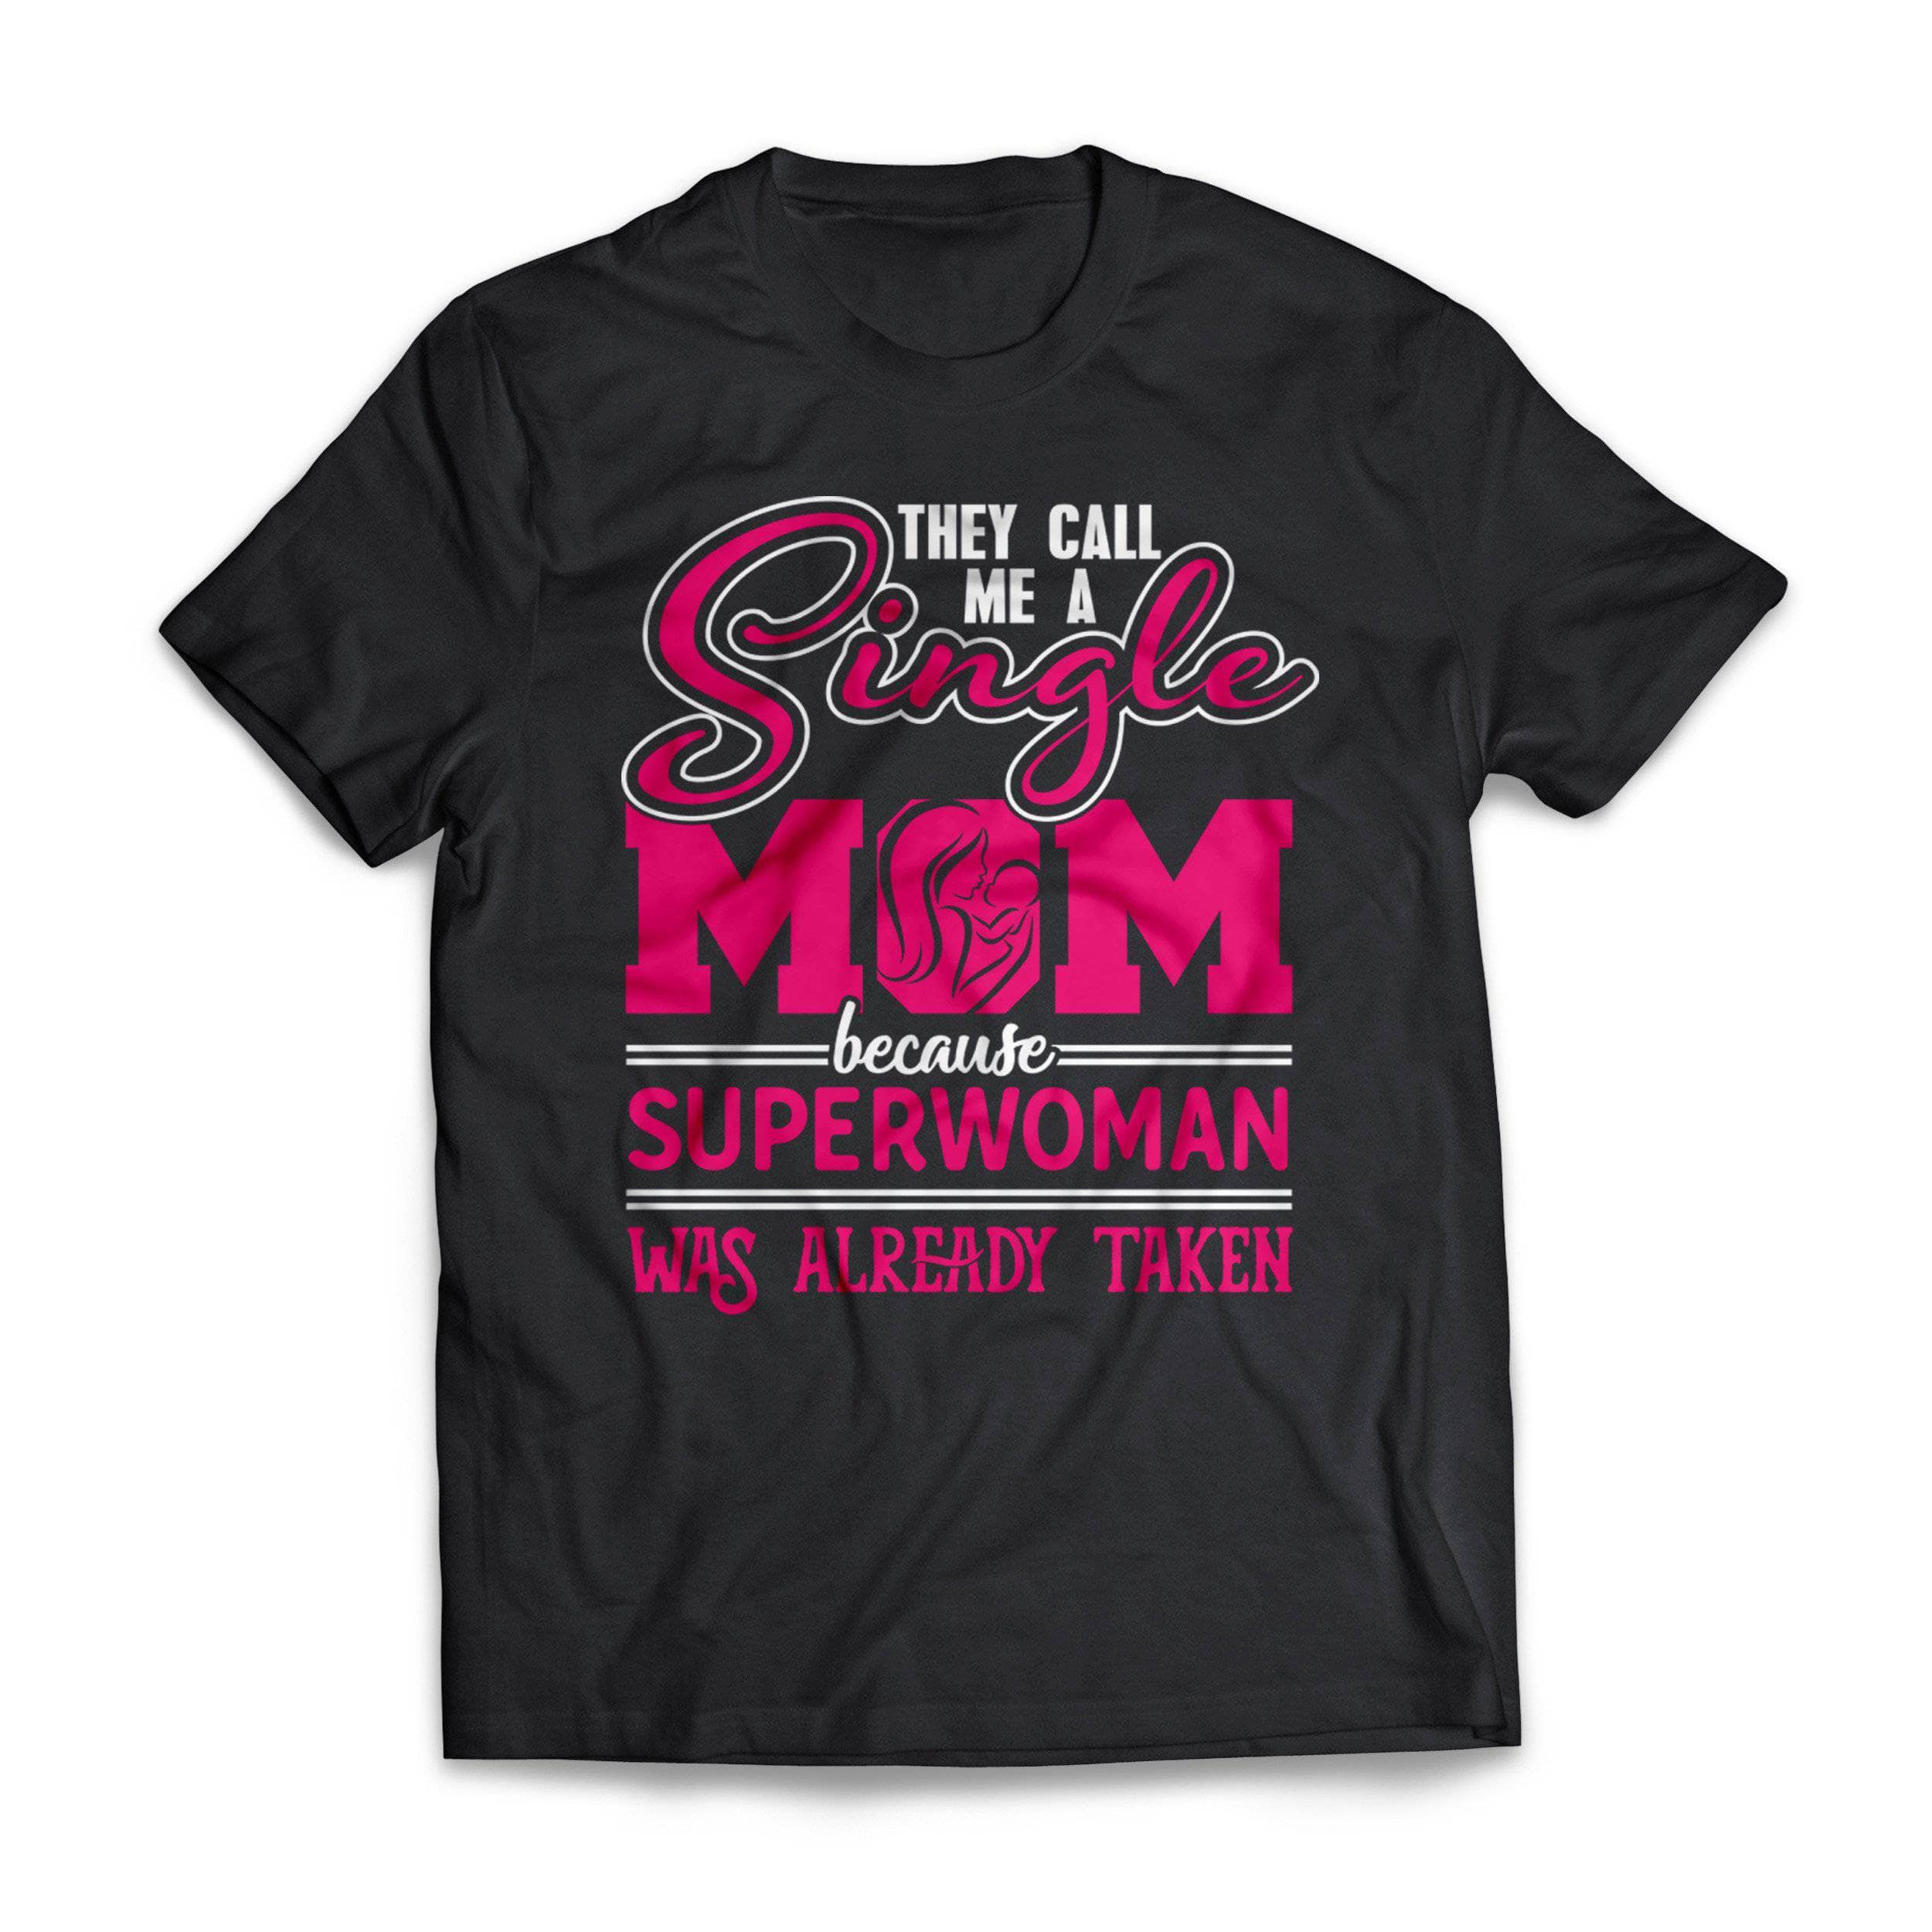 Super Woman Single Mom Short Sleeve Tee